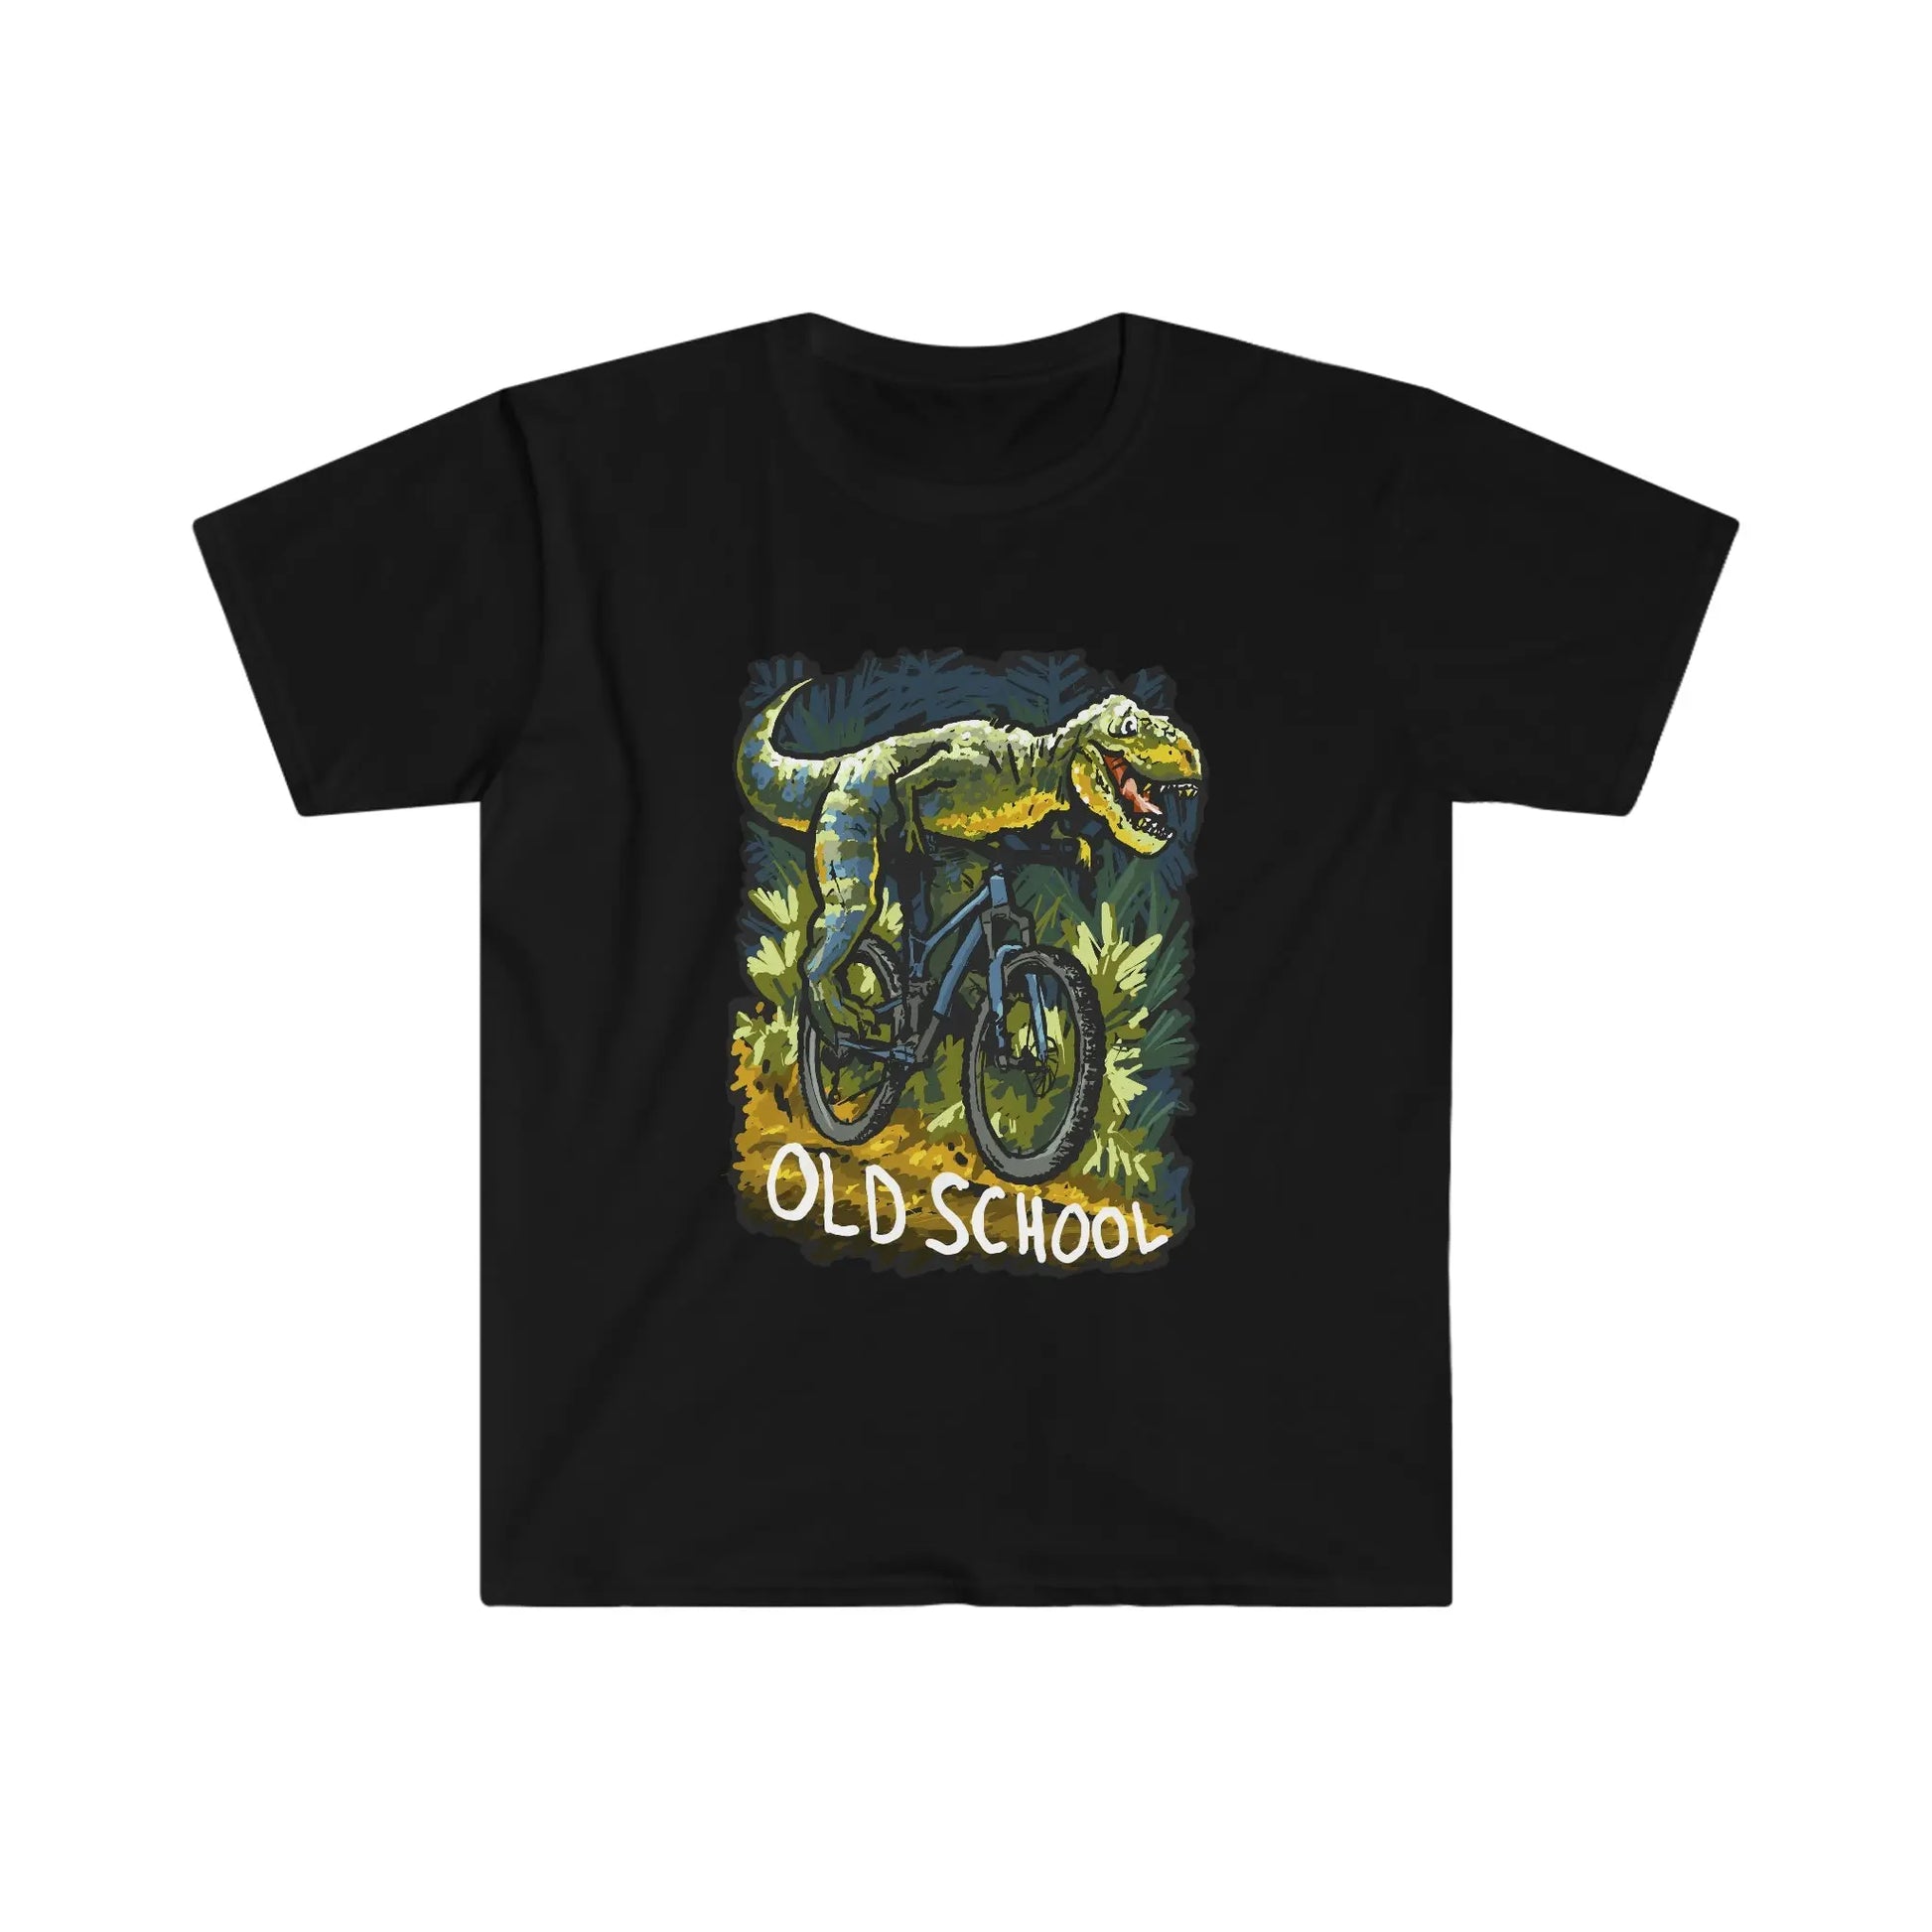 Old School Dinosaur on Mountain Bike T-shirt - Imagine my Life! - bicycle bike biking